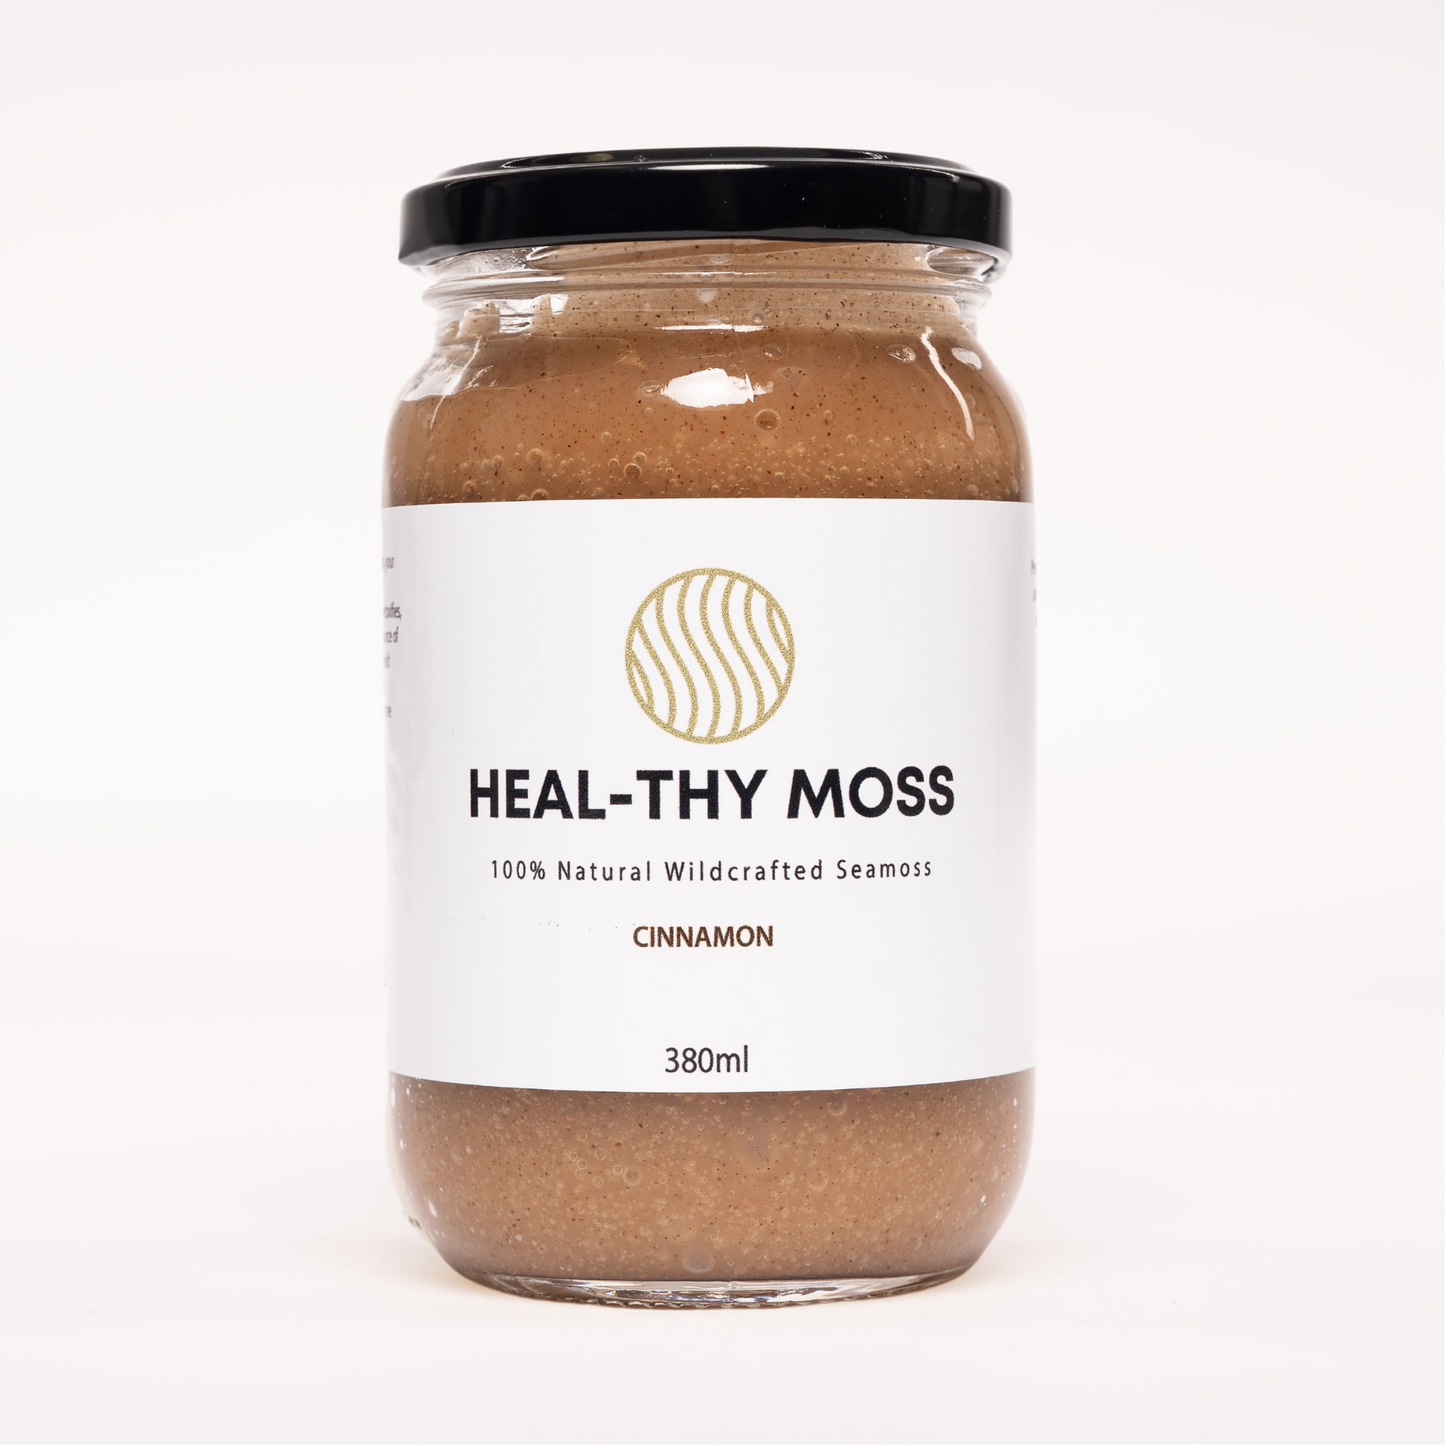 Cinnamon Heal-thy Moss Seamoss - 380ml